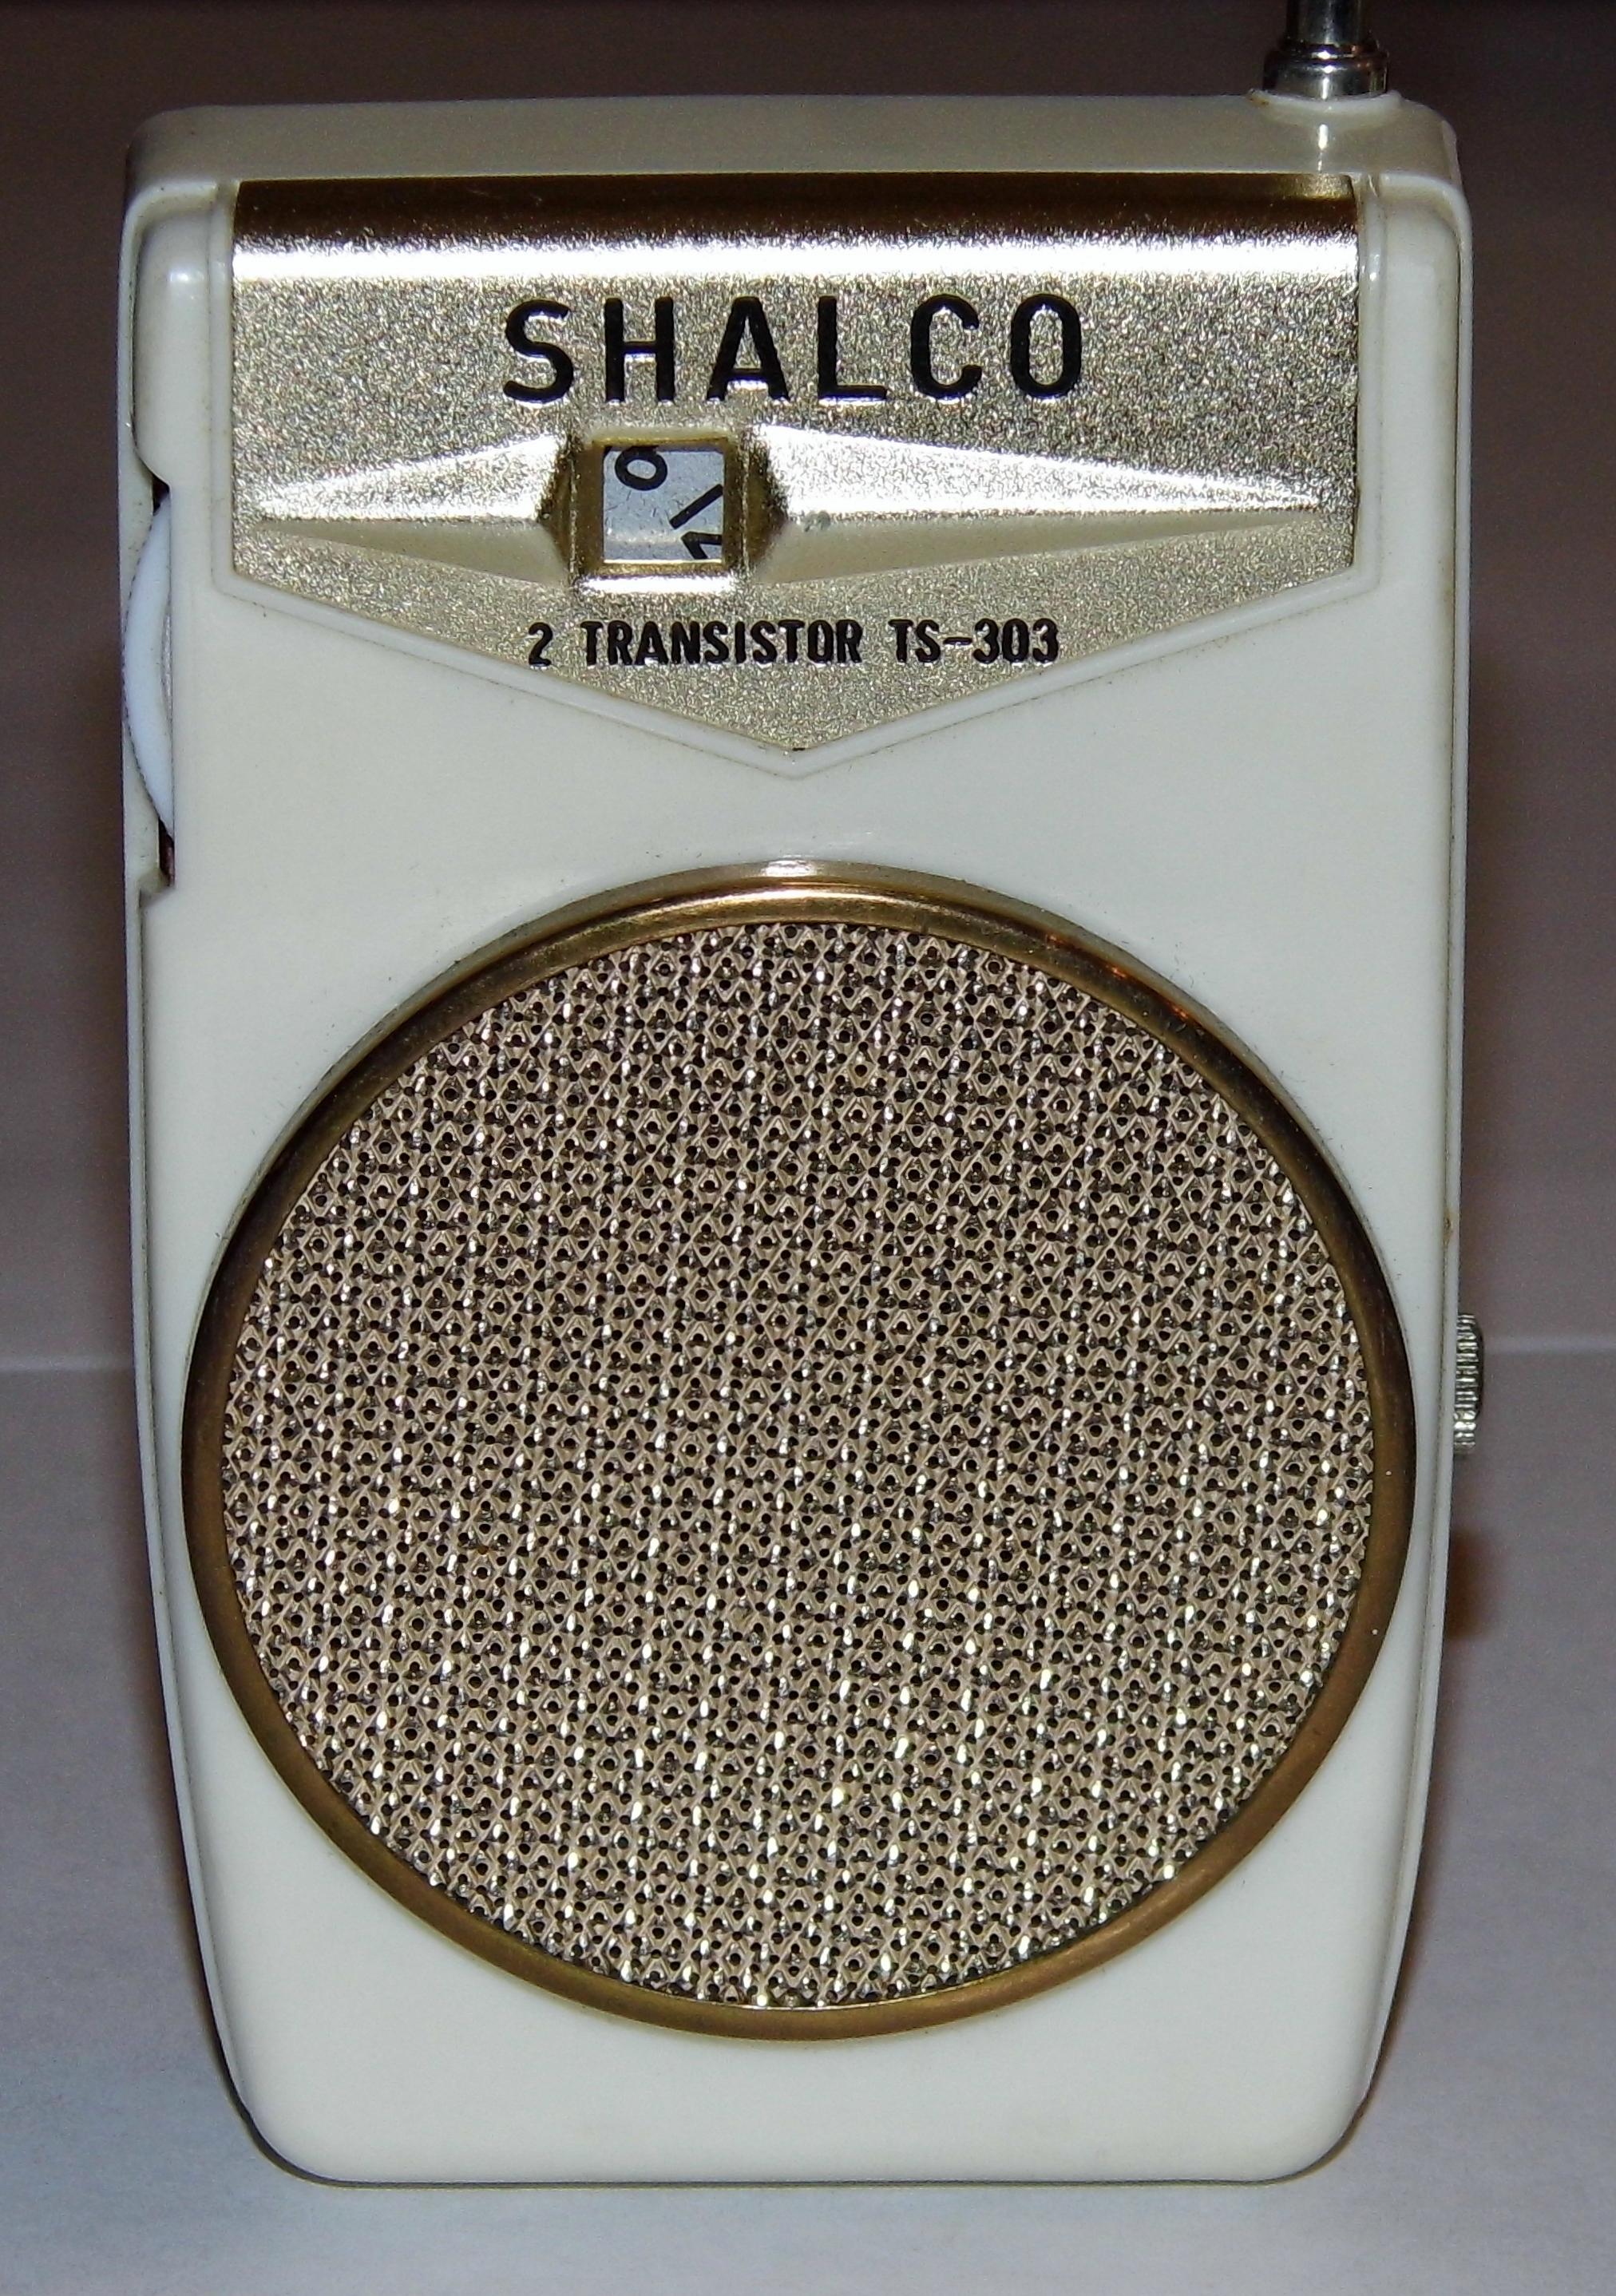 Vintage Shalco 2-Transistor Boy's Radio, Model TS-303, Made in Japan (8438811697)